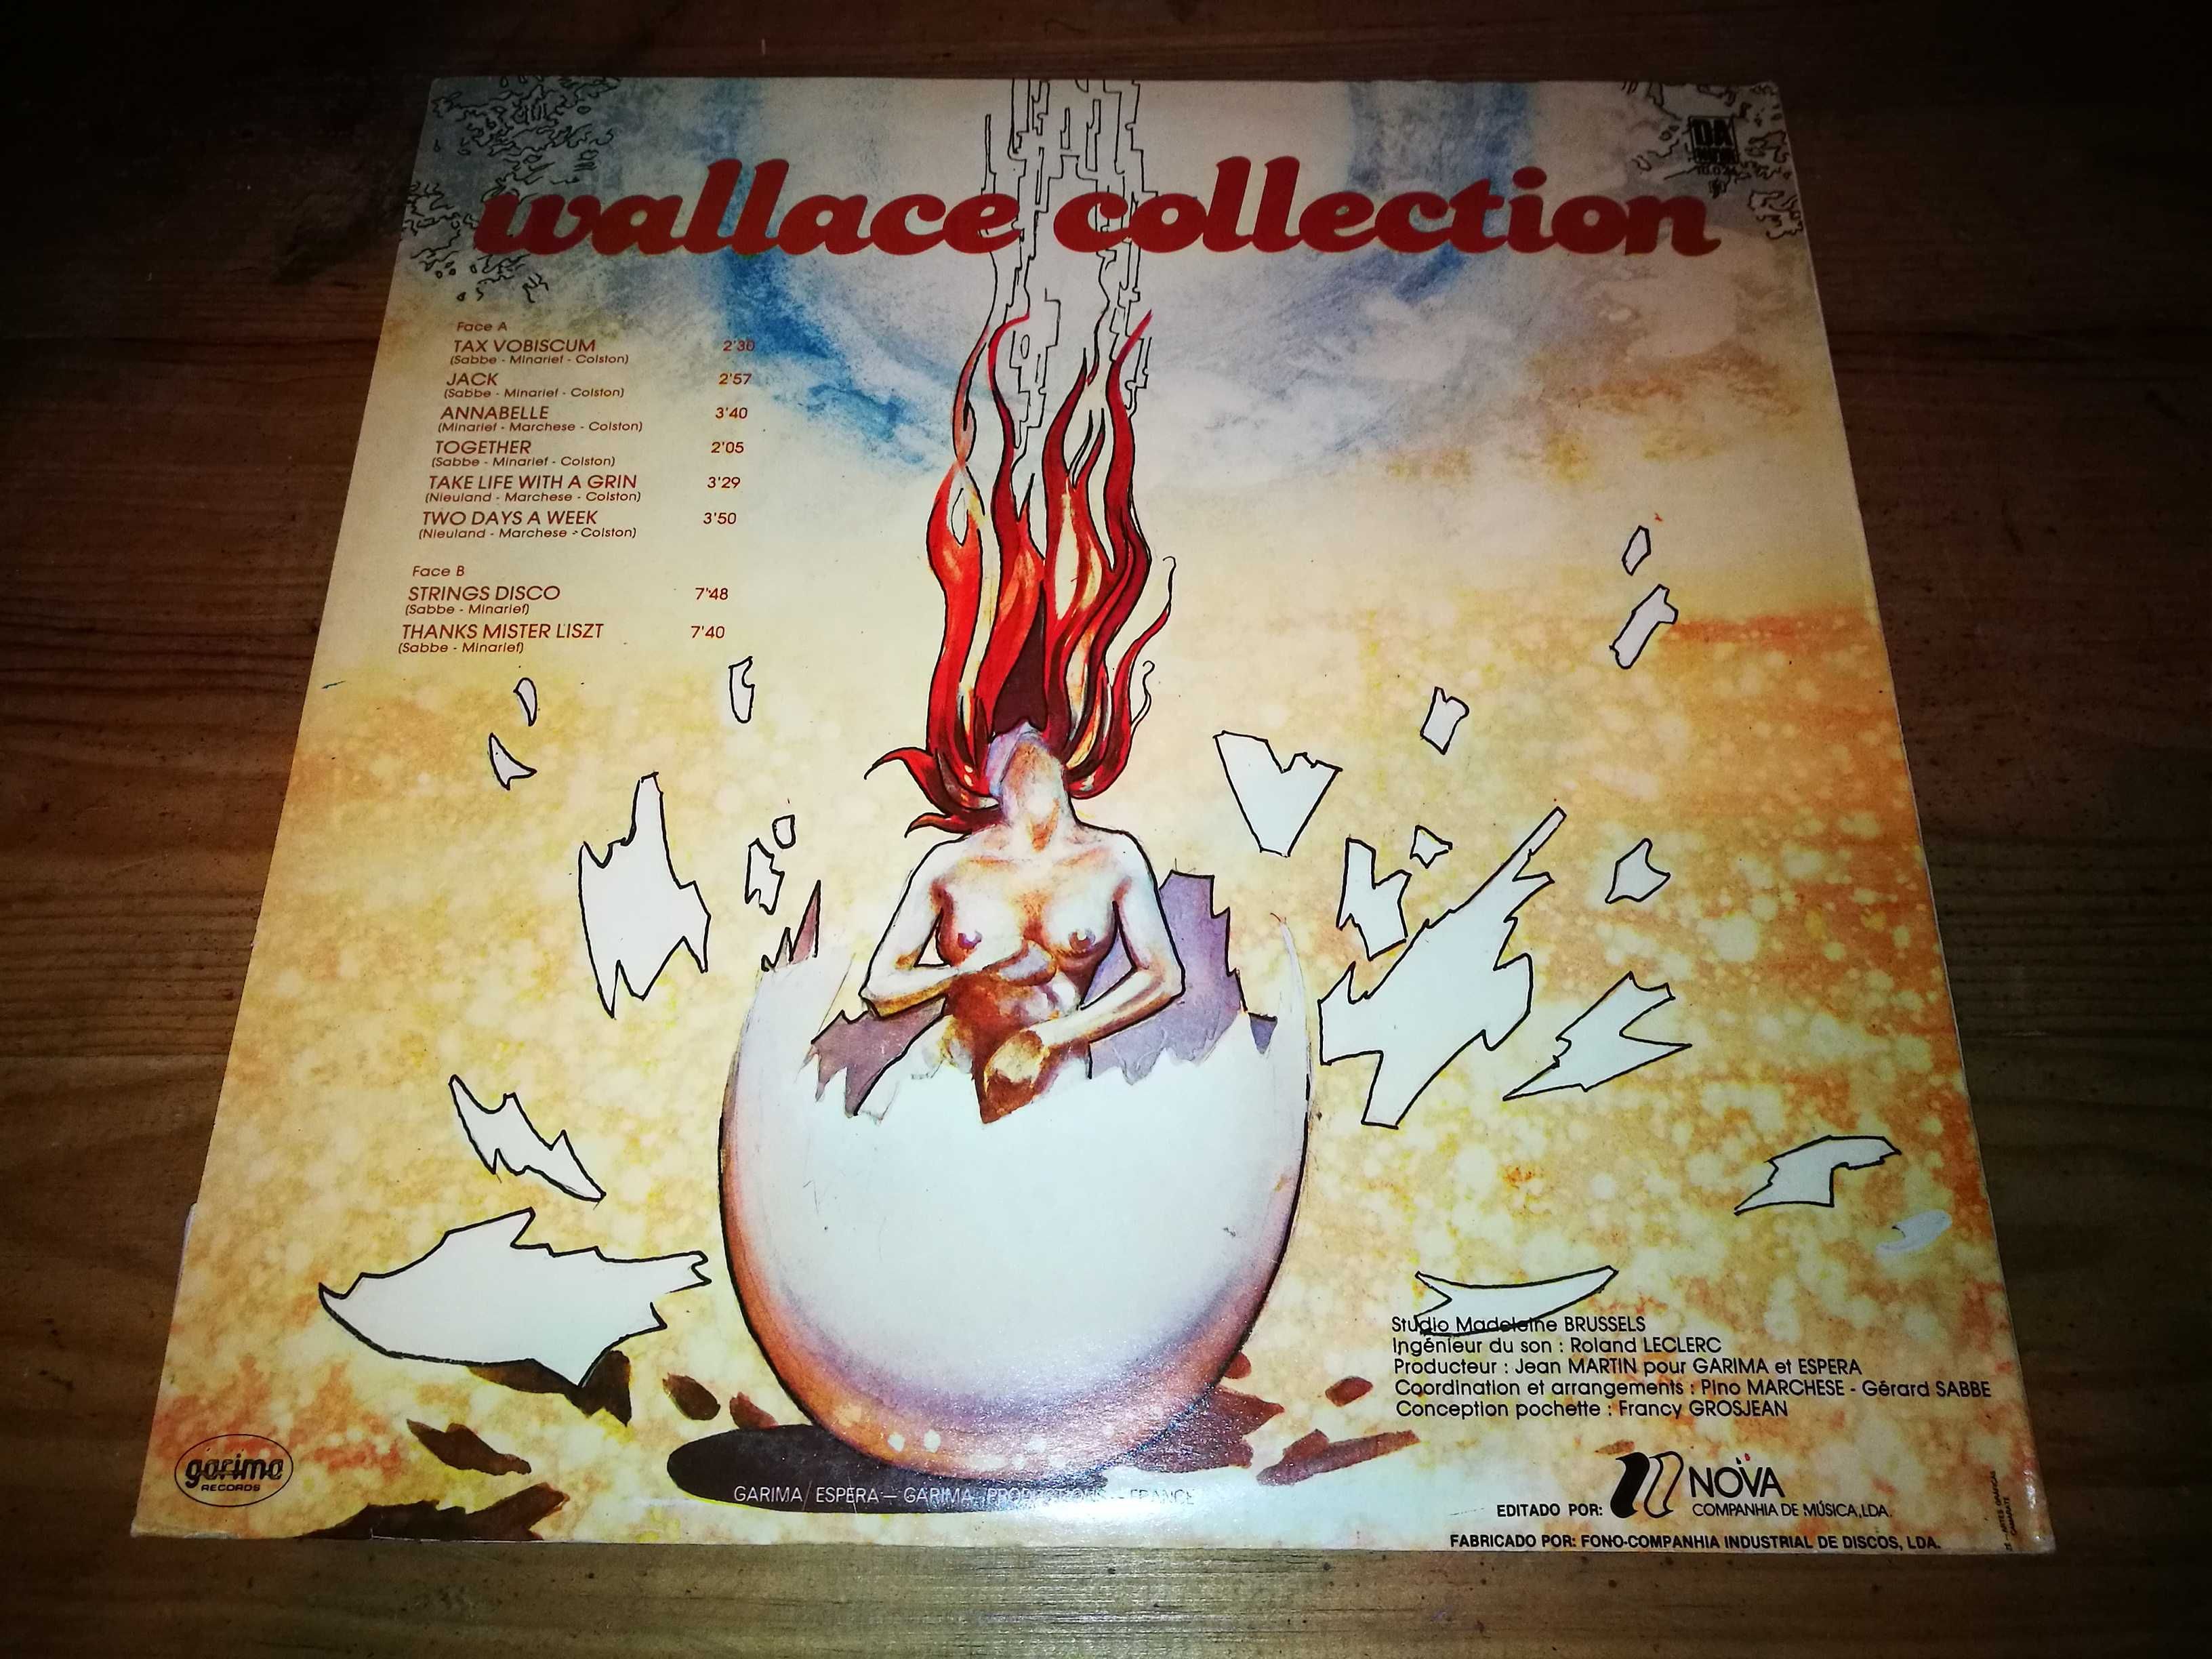 Wallace Colection  - Tax Vobiscum LP